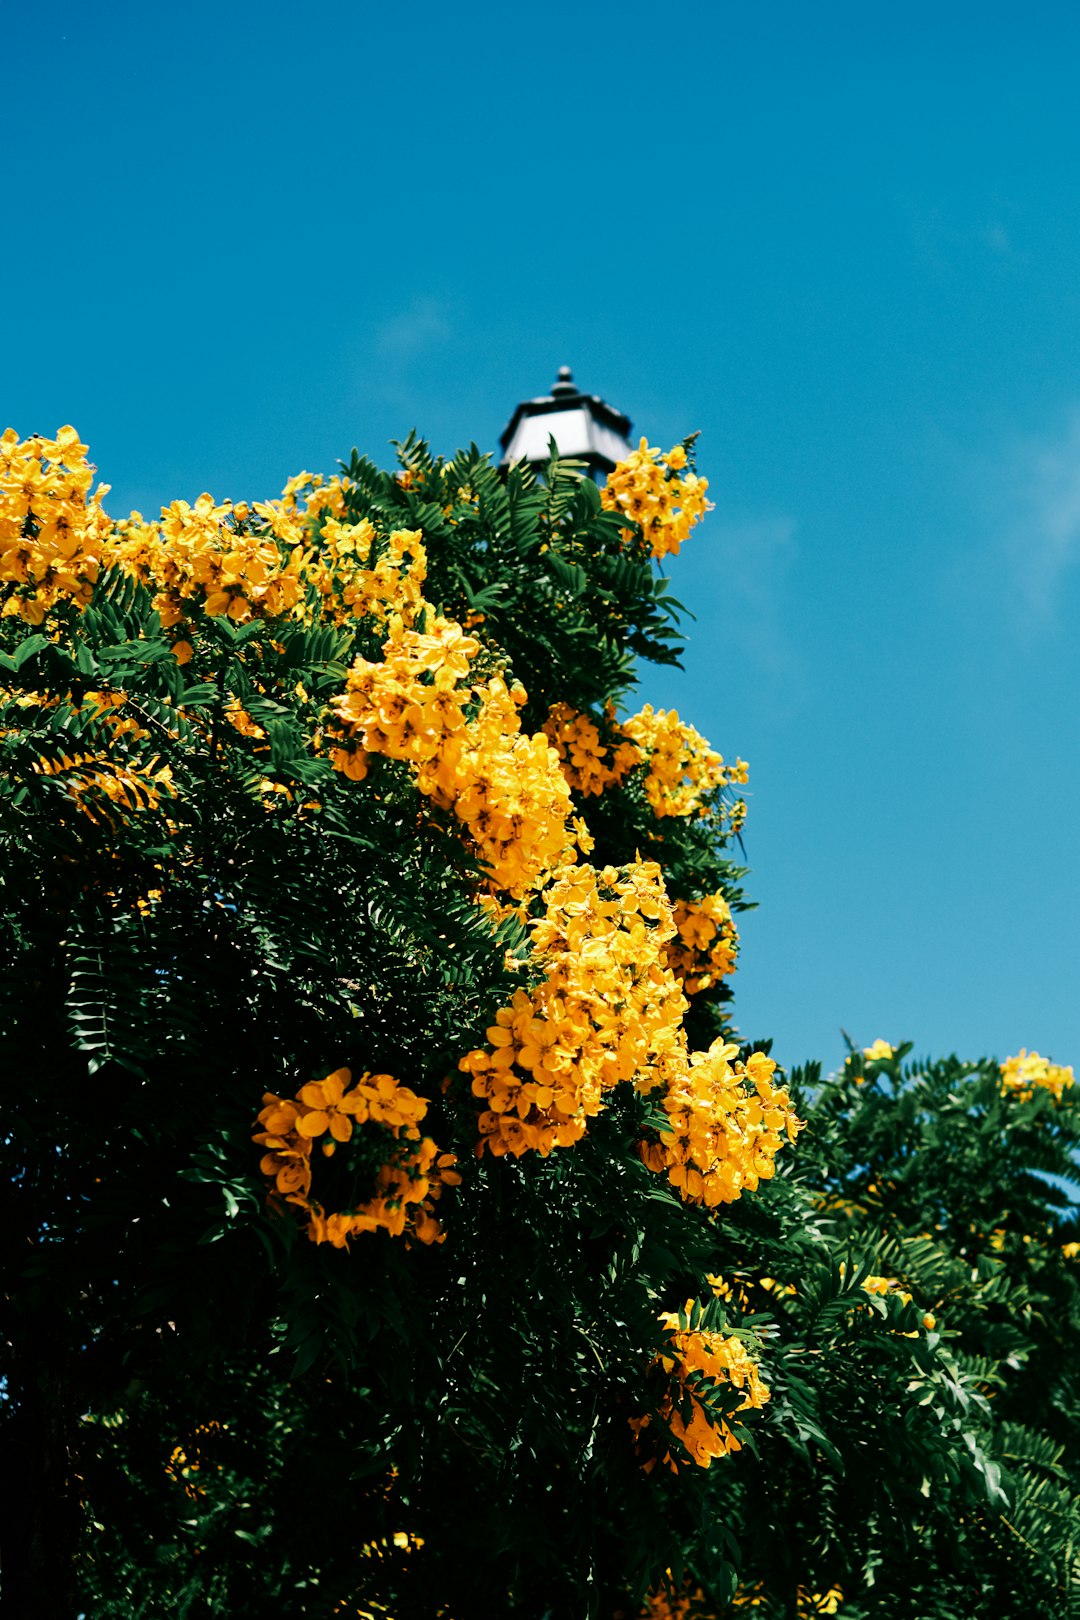 yellow-petaled flower